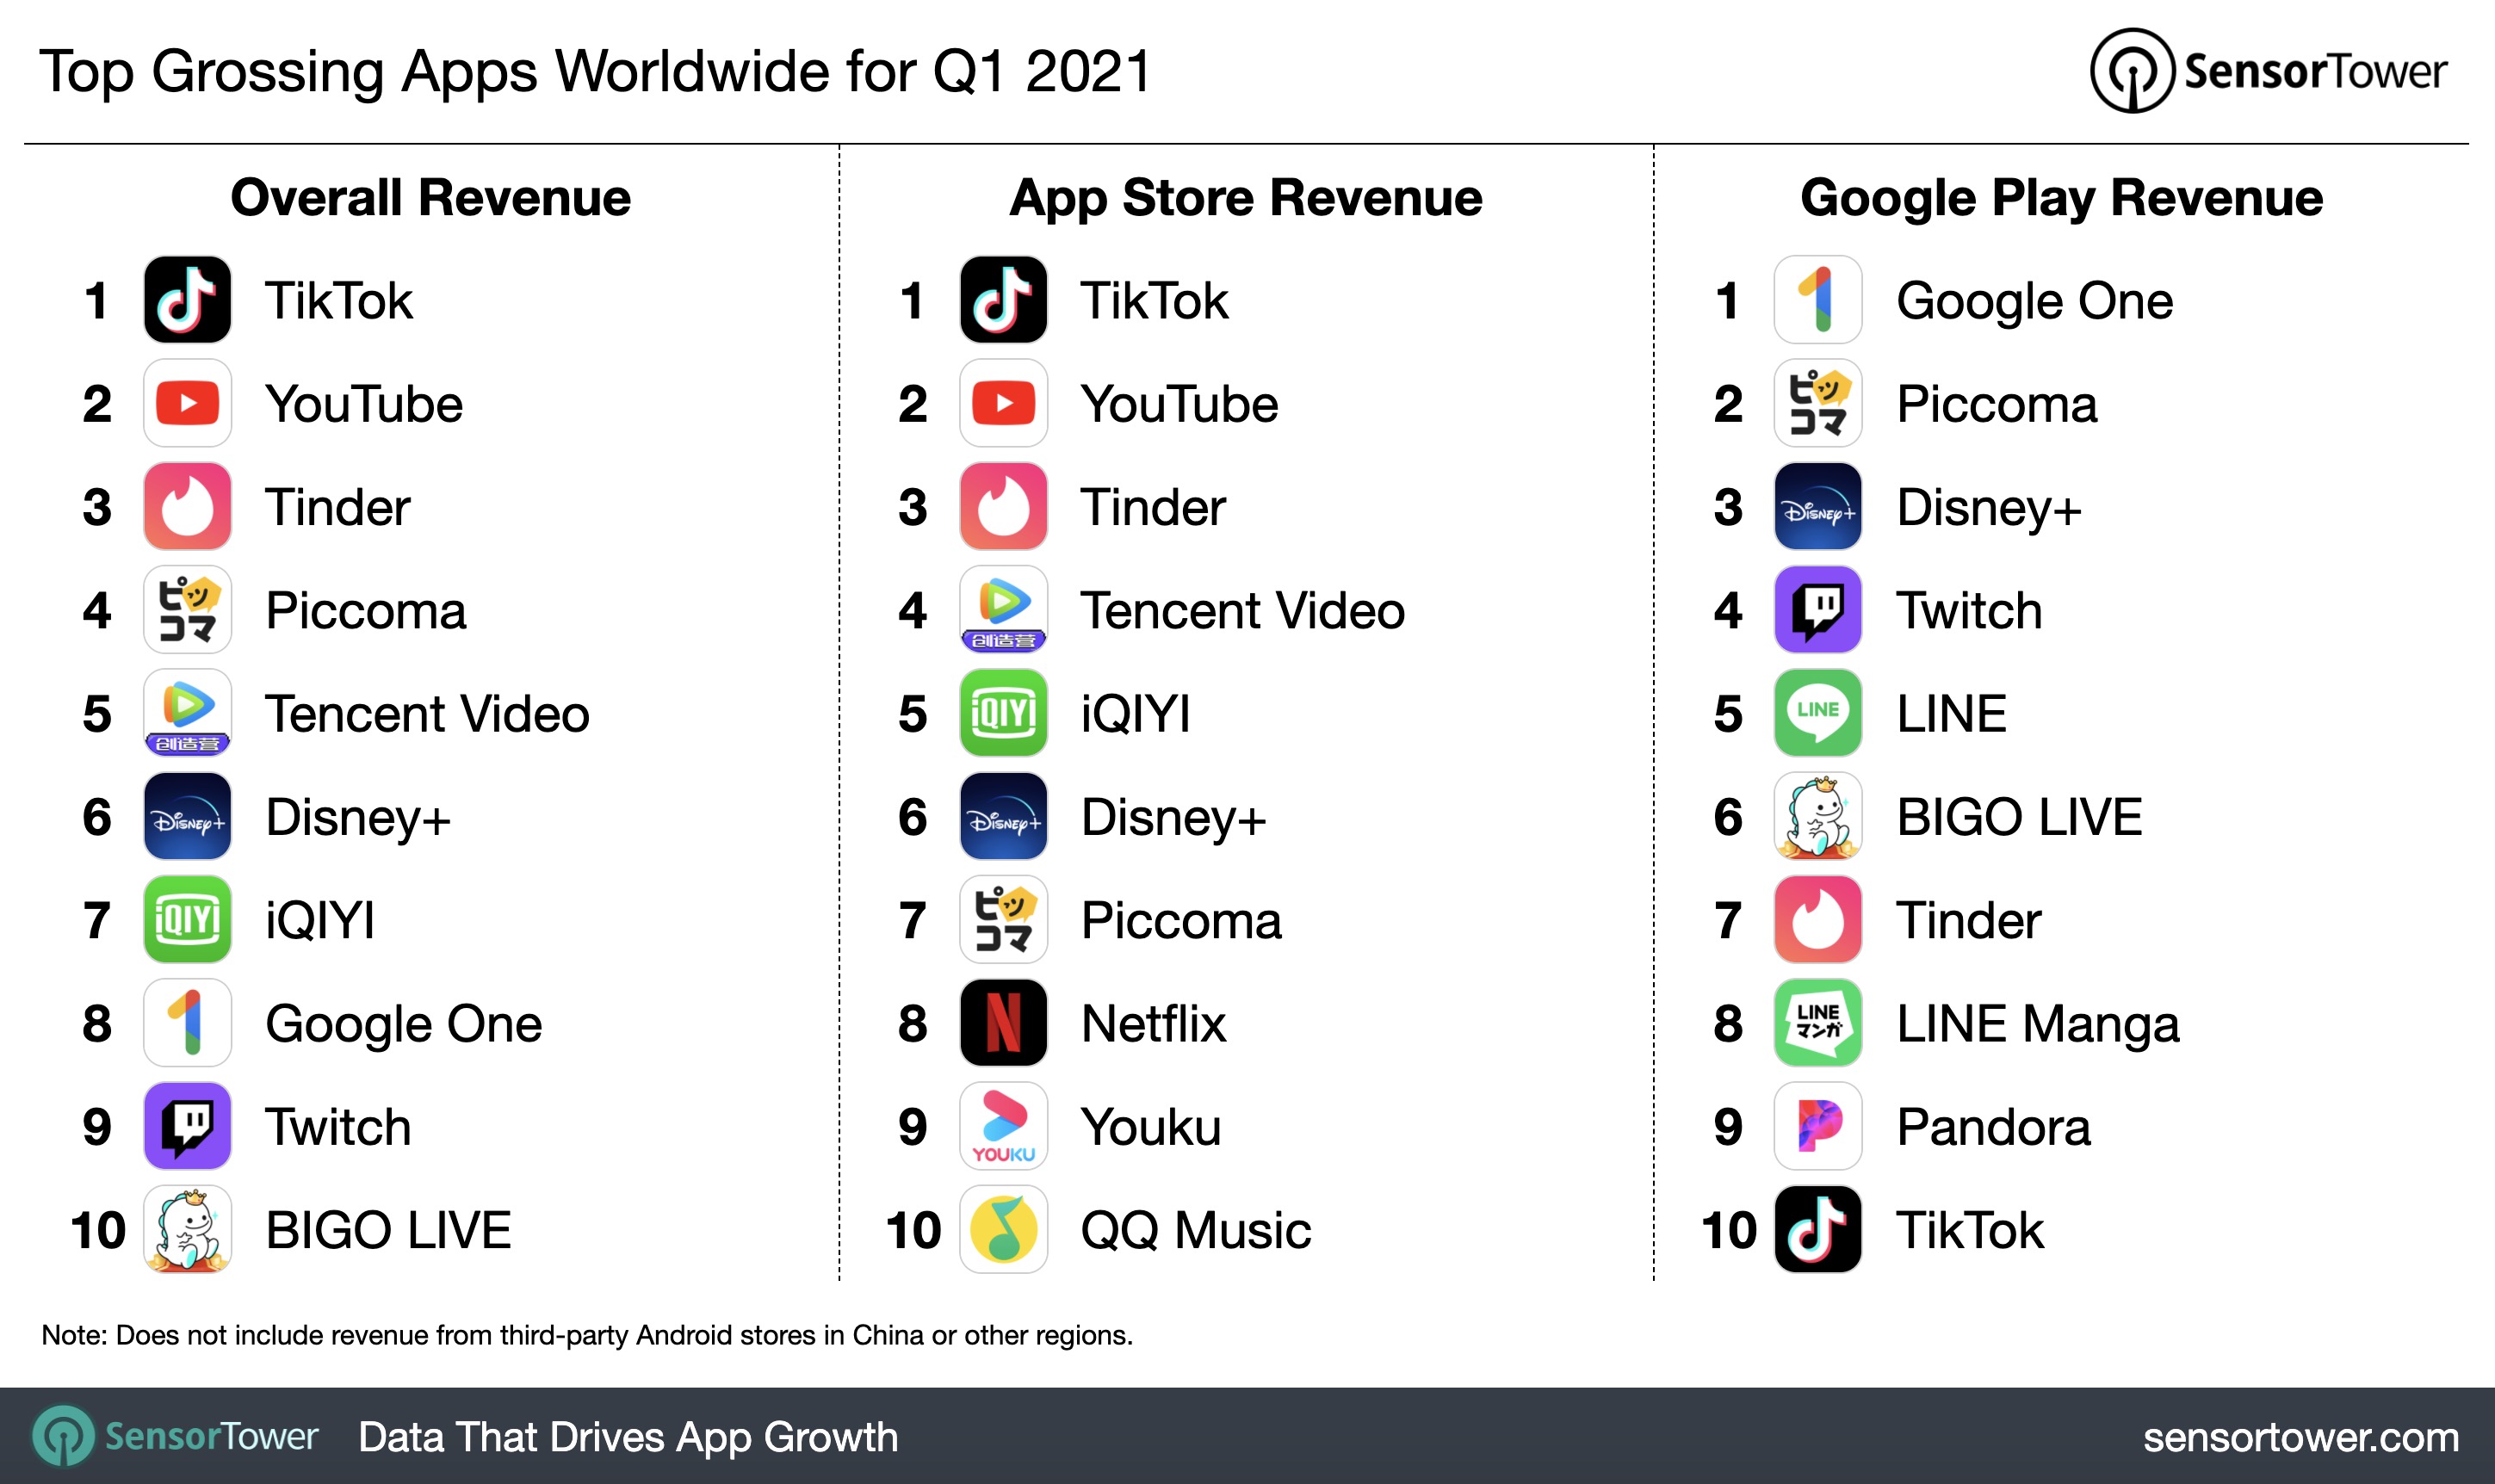 TikTok was the highest-earning app across both stores in 1Q21.